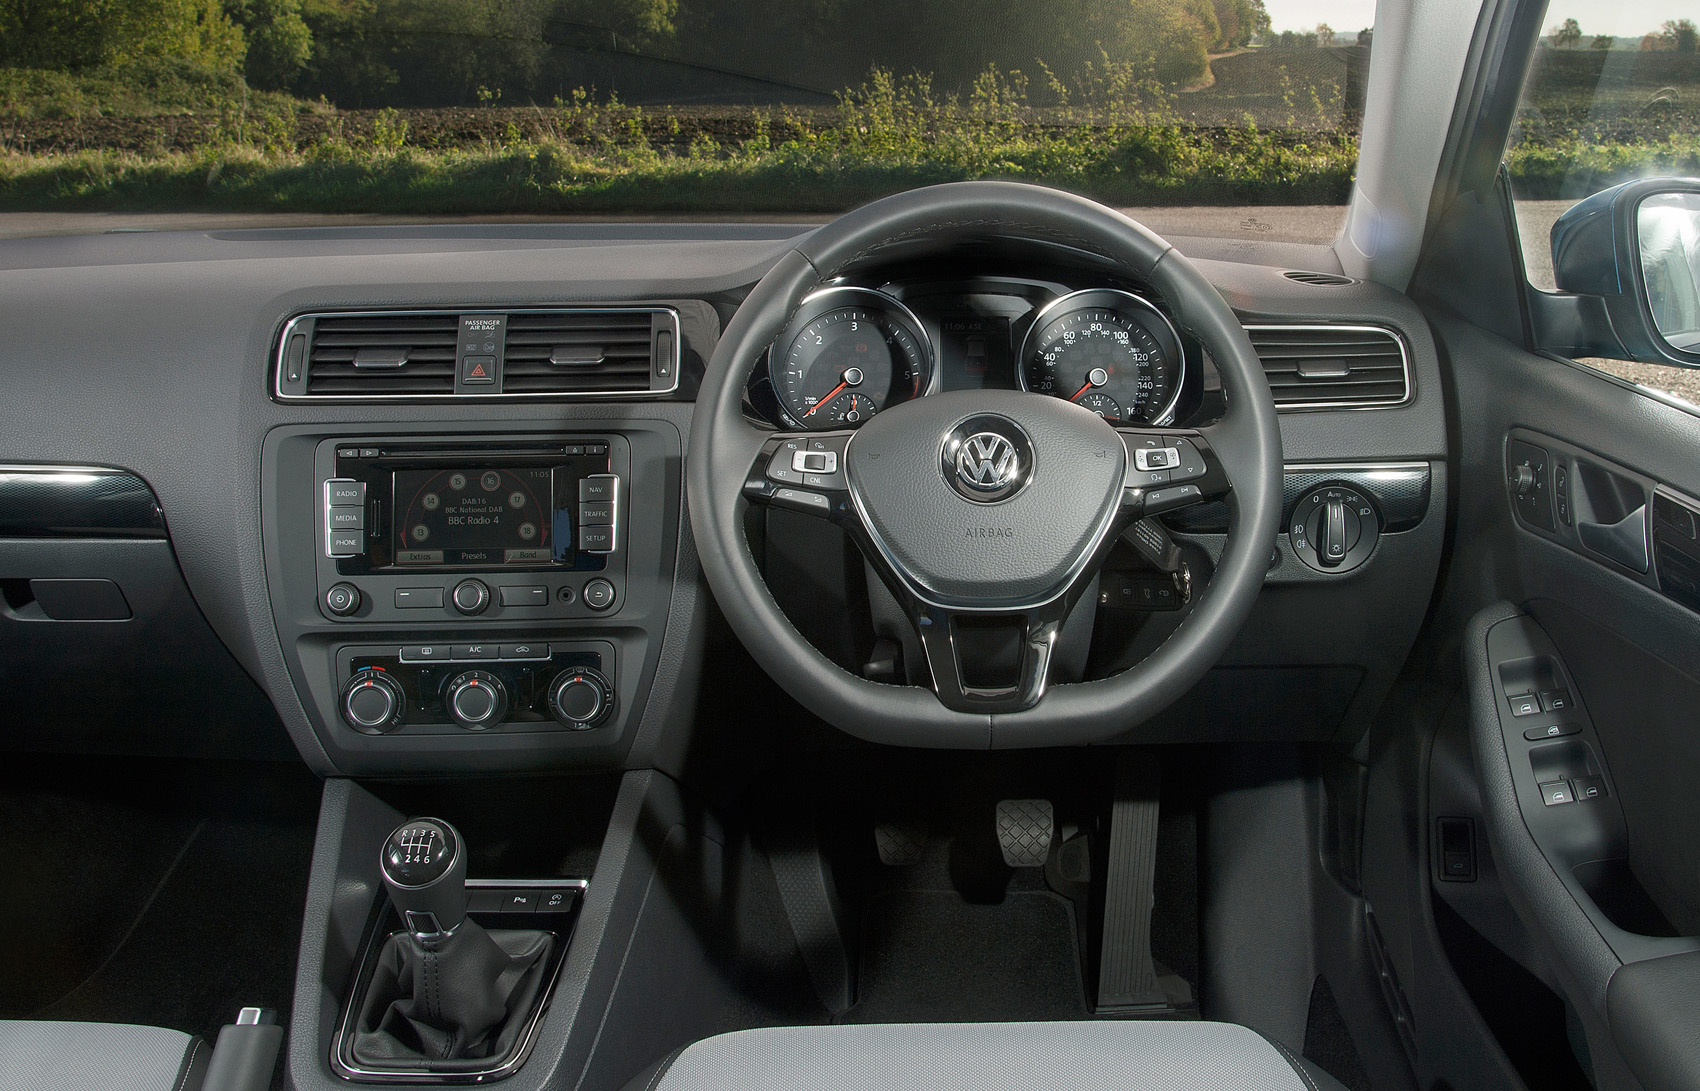 Used Volkswagen Jetta 2010-2018 review